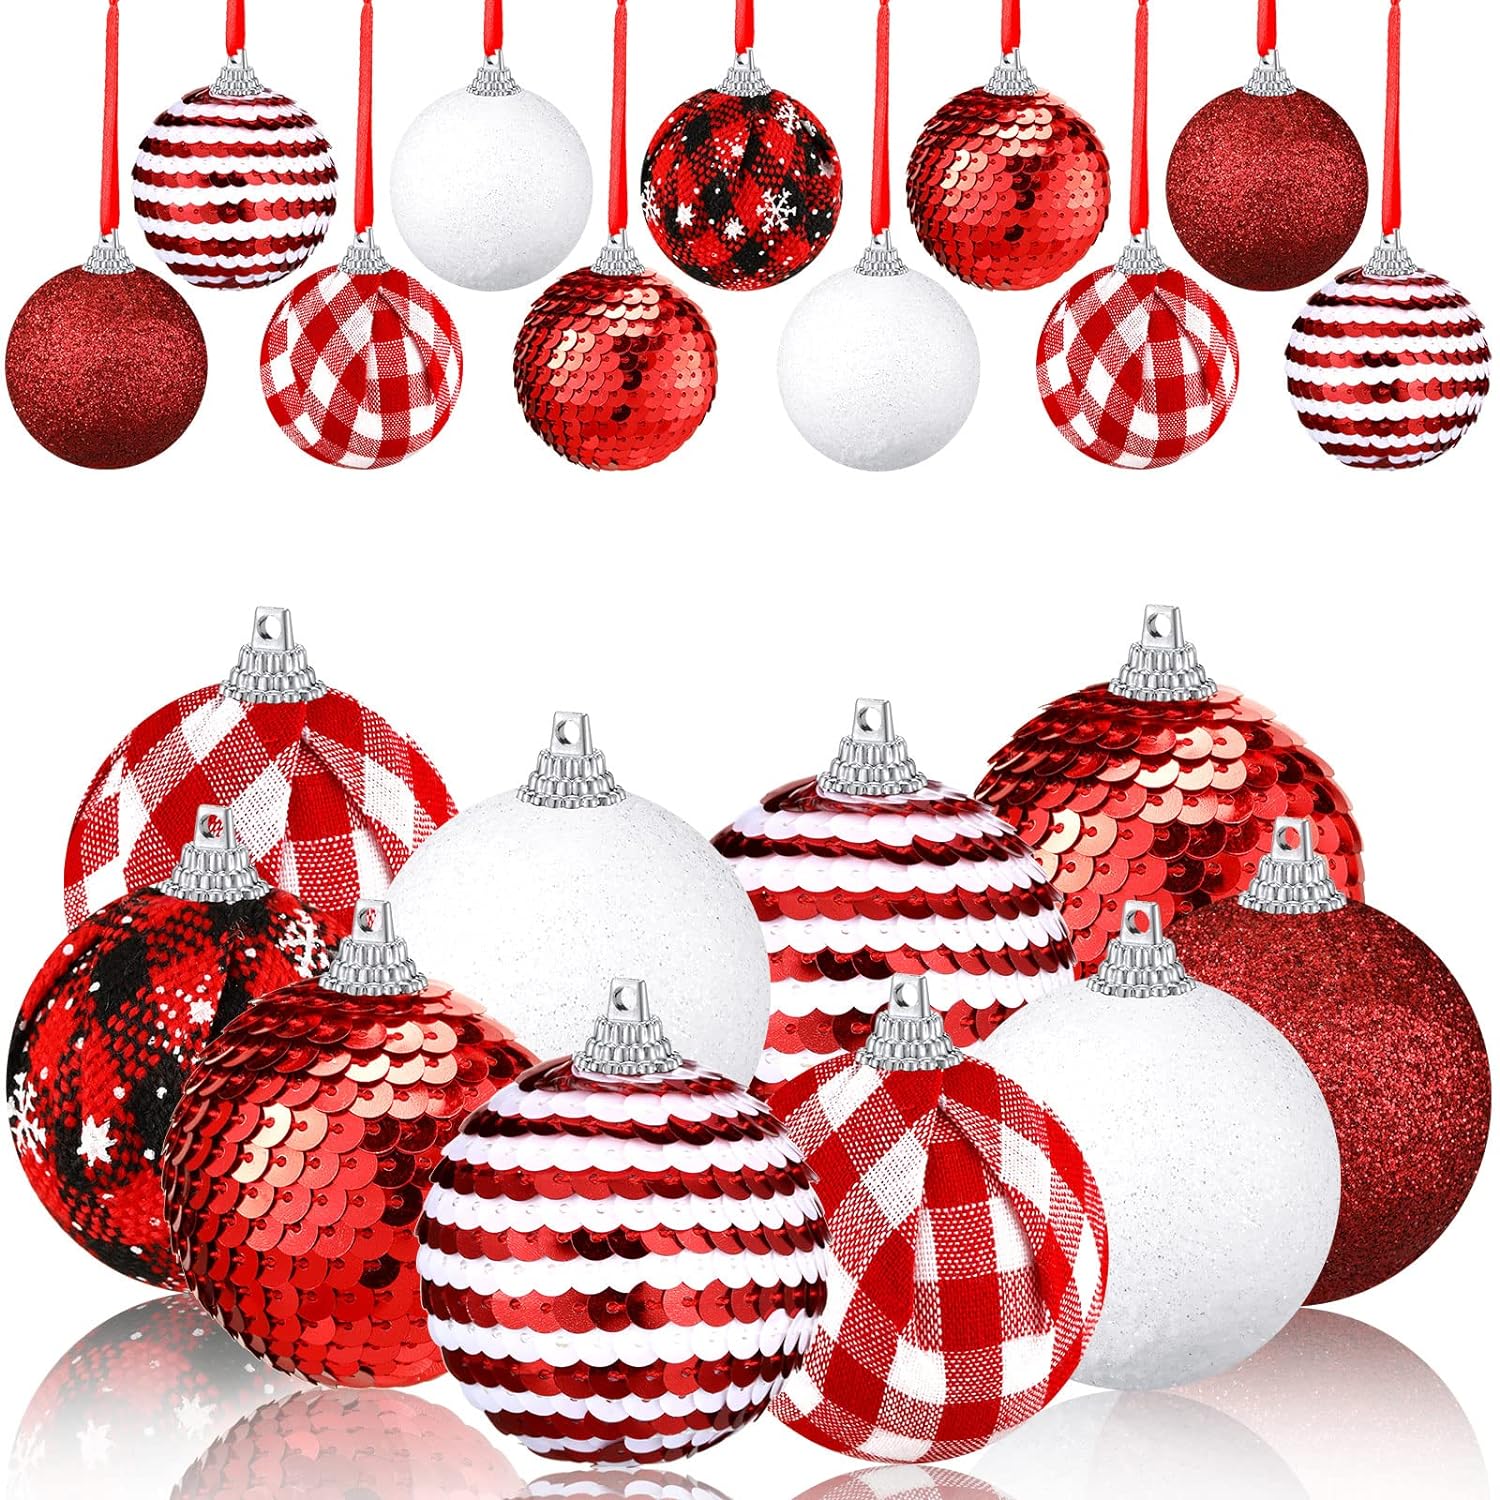 thinkstar 12 Pieces Christmas Buffalo Plaid Balls Ornaments Christmas Tree Ornaments Glitter Sequin Fabric Wrapped Decorative Hanging…